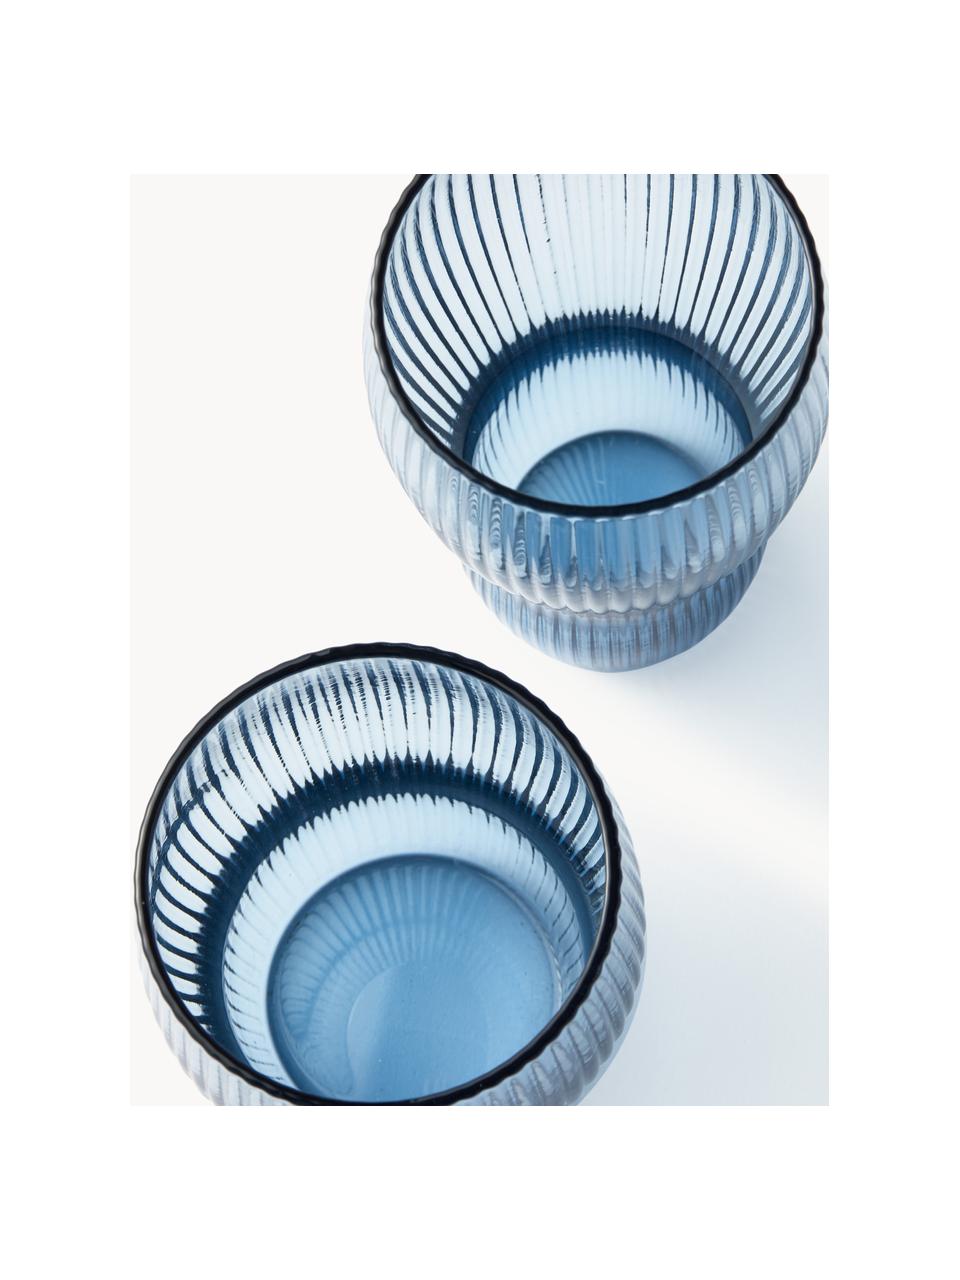 Mondgeblazen longdrinkglazen Pum met groefstructuur, 2 stuks, Glas, mondgeblazen, Lichtblauw, Ø 11 x H 16 cm